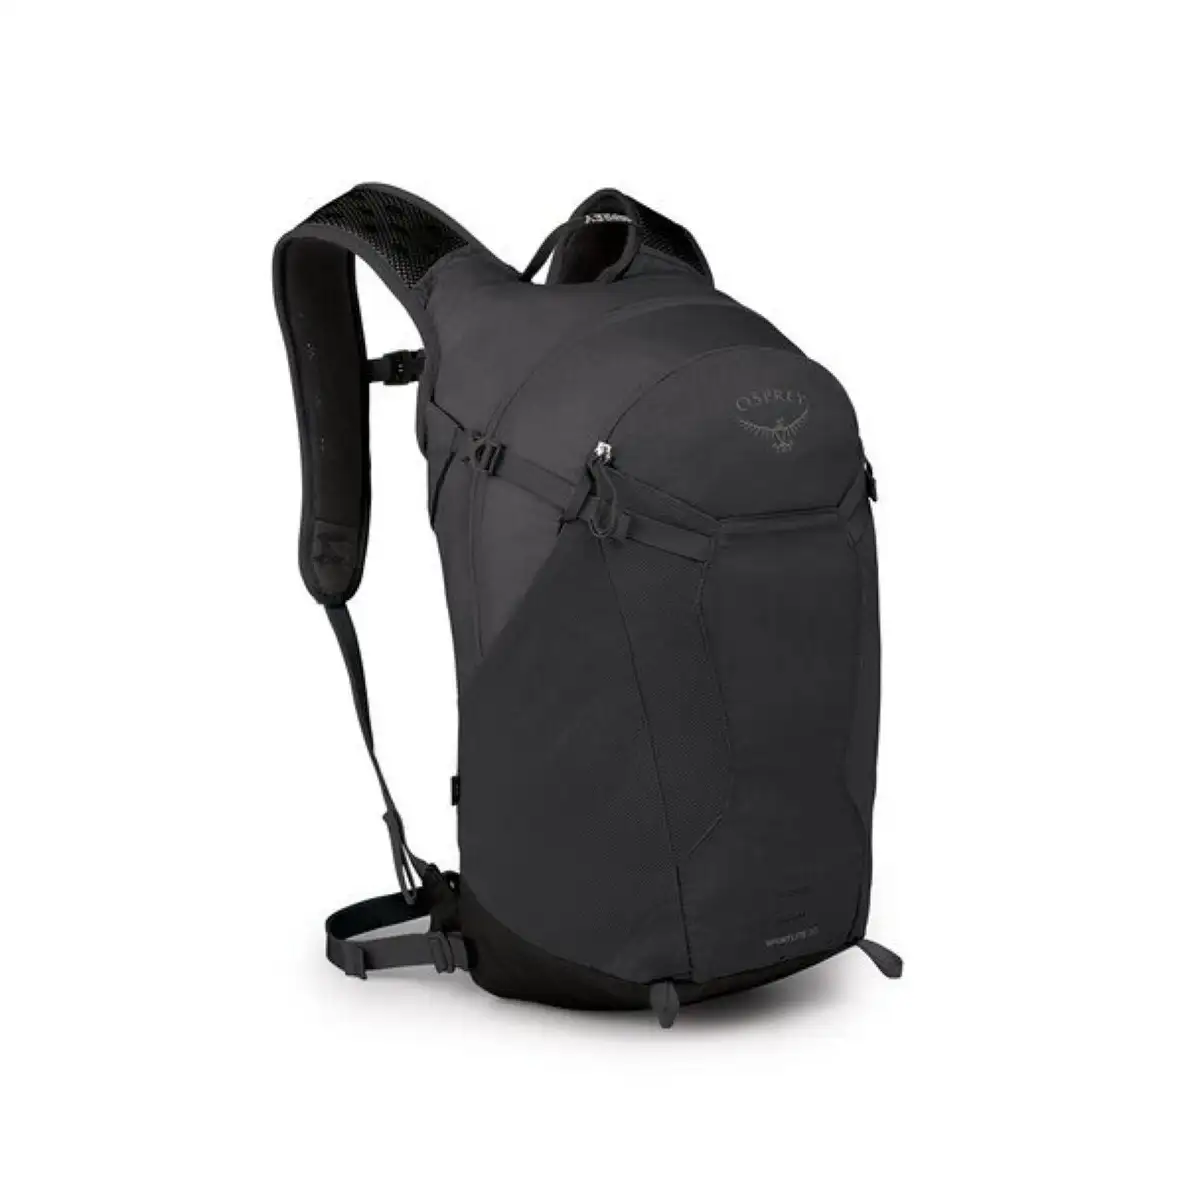 Osprey's Outdoor Backpacks